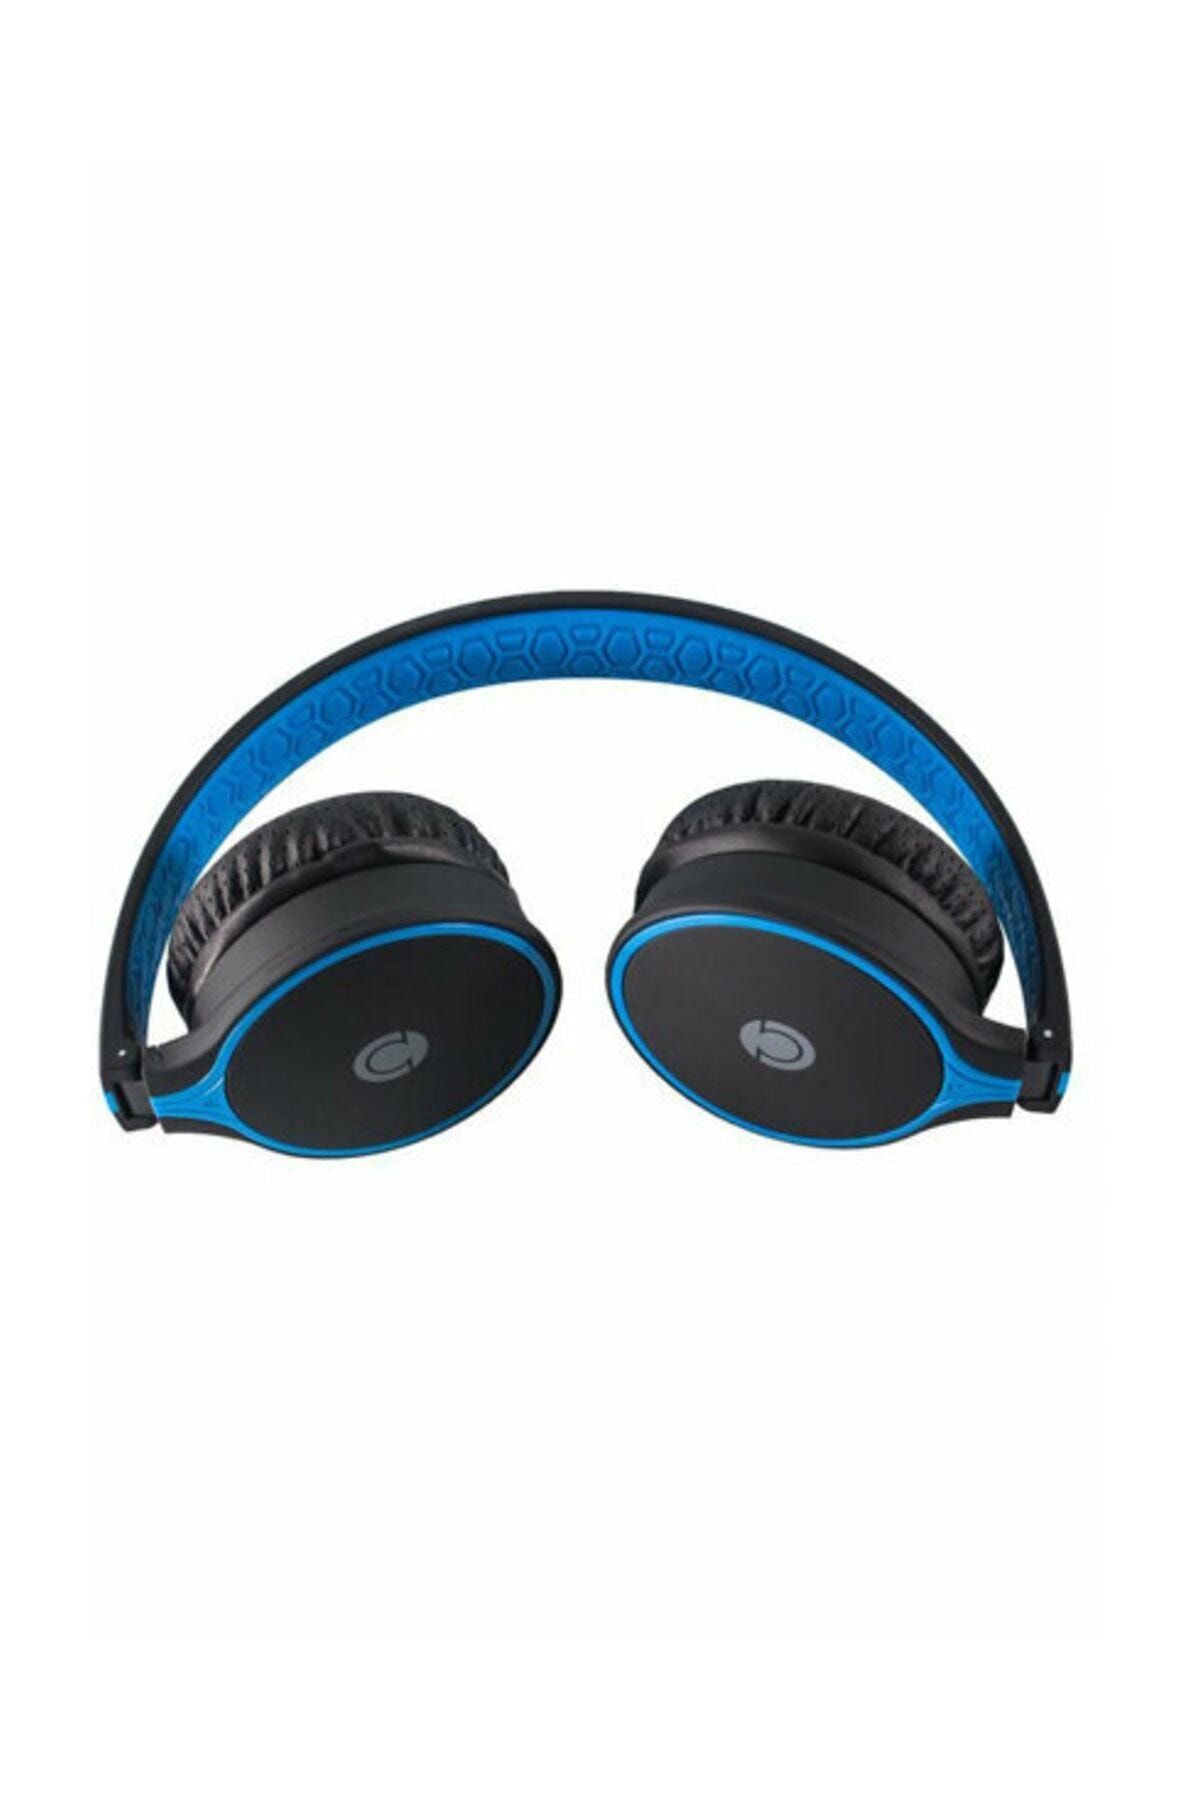 Preo My Sound Ms08 Kablosuz Mansonlu Bluetooth Kulak Üstü Kulaklık Mavi